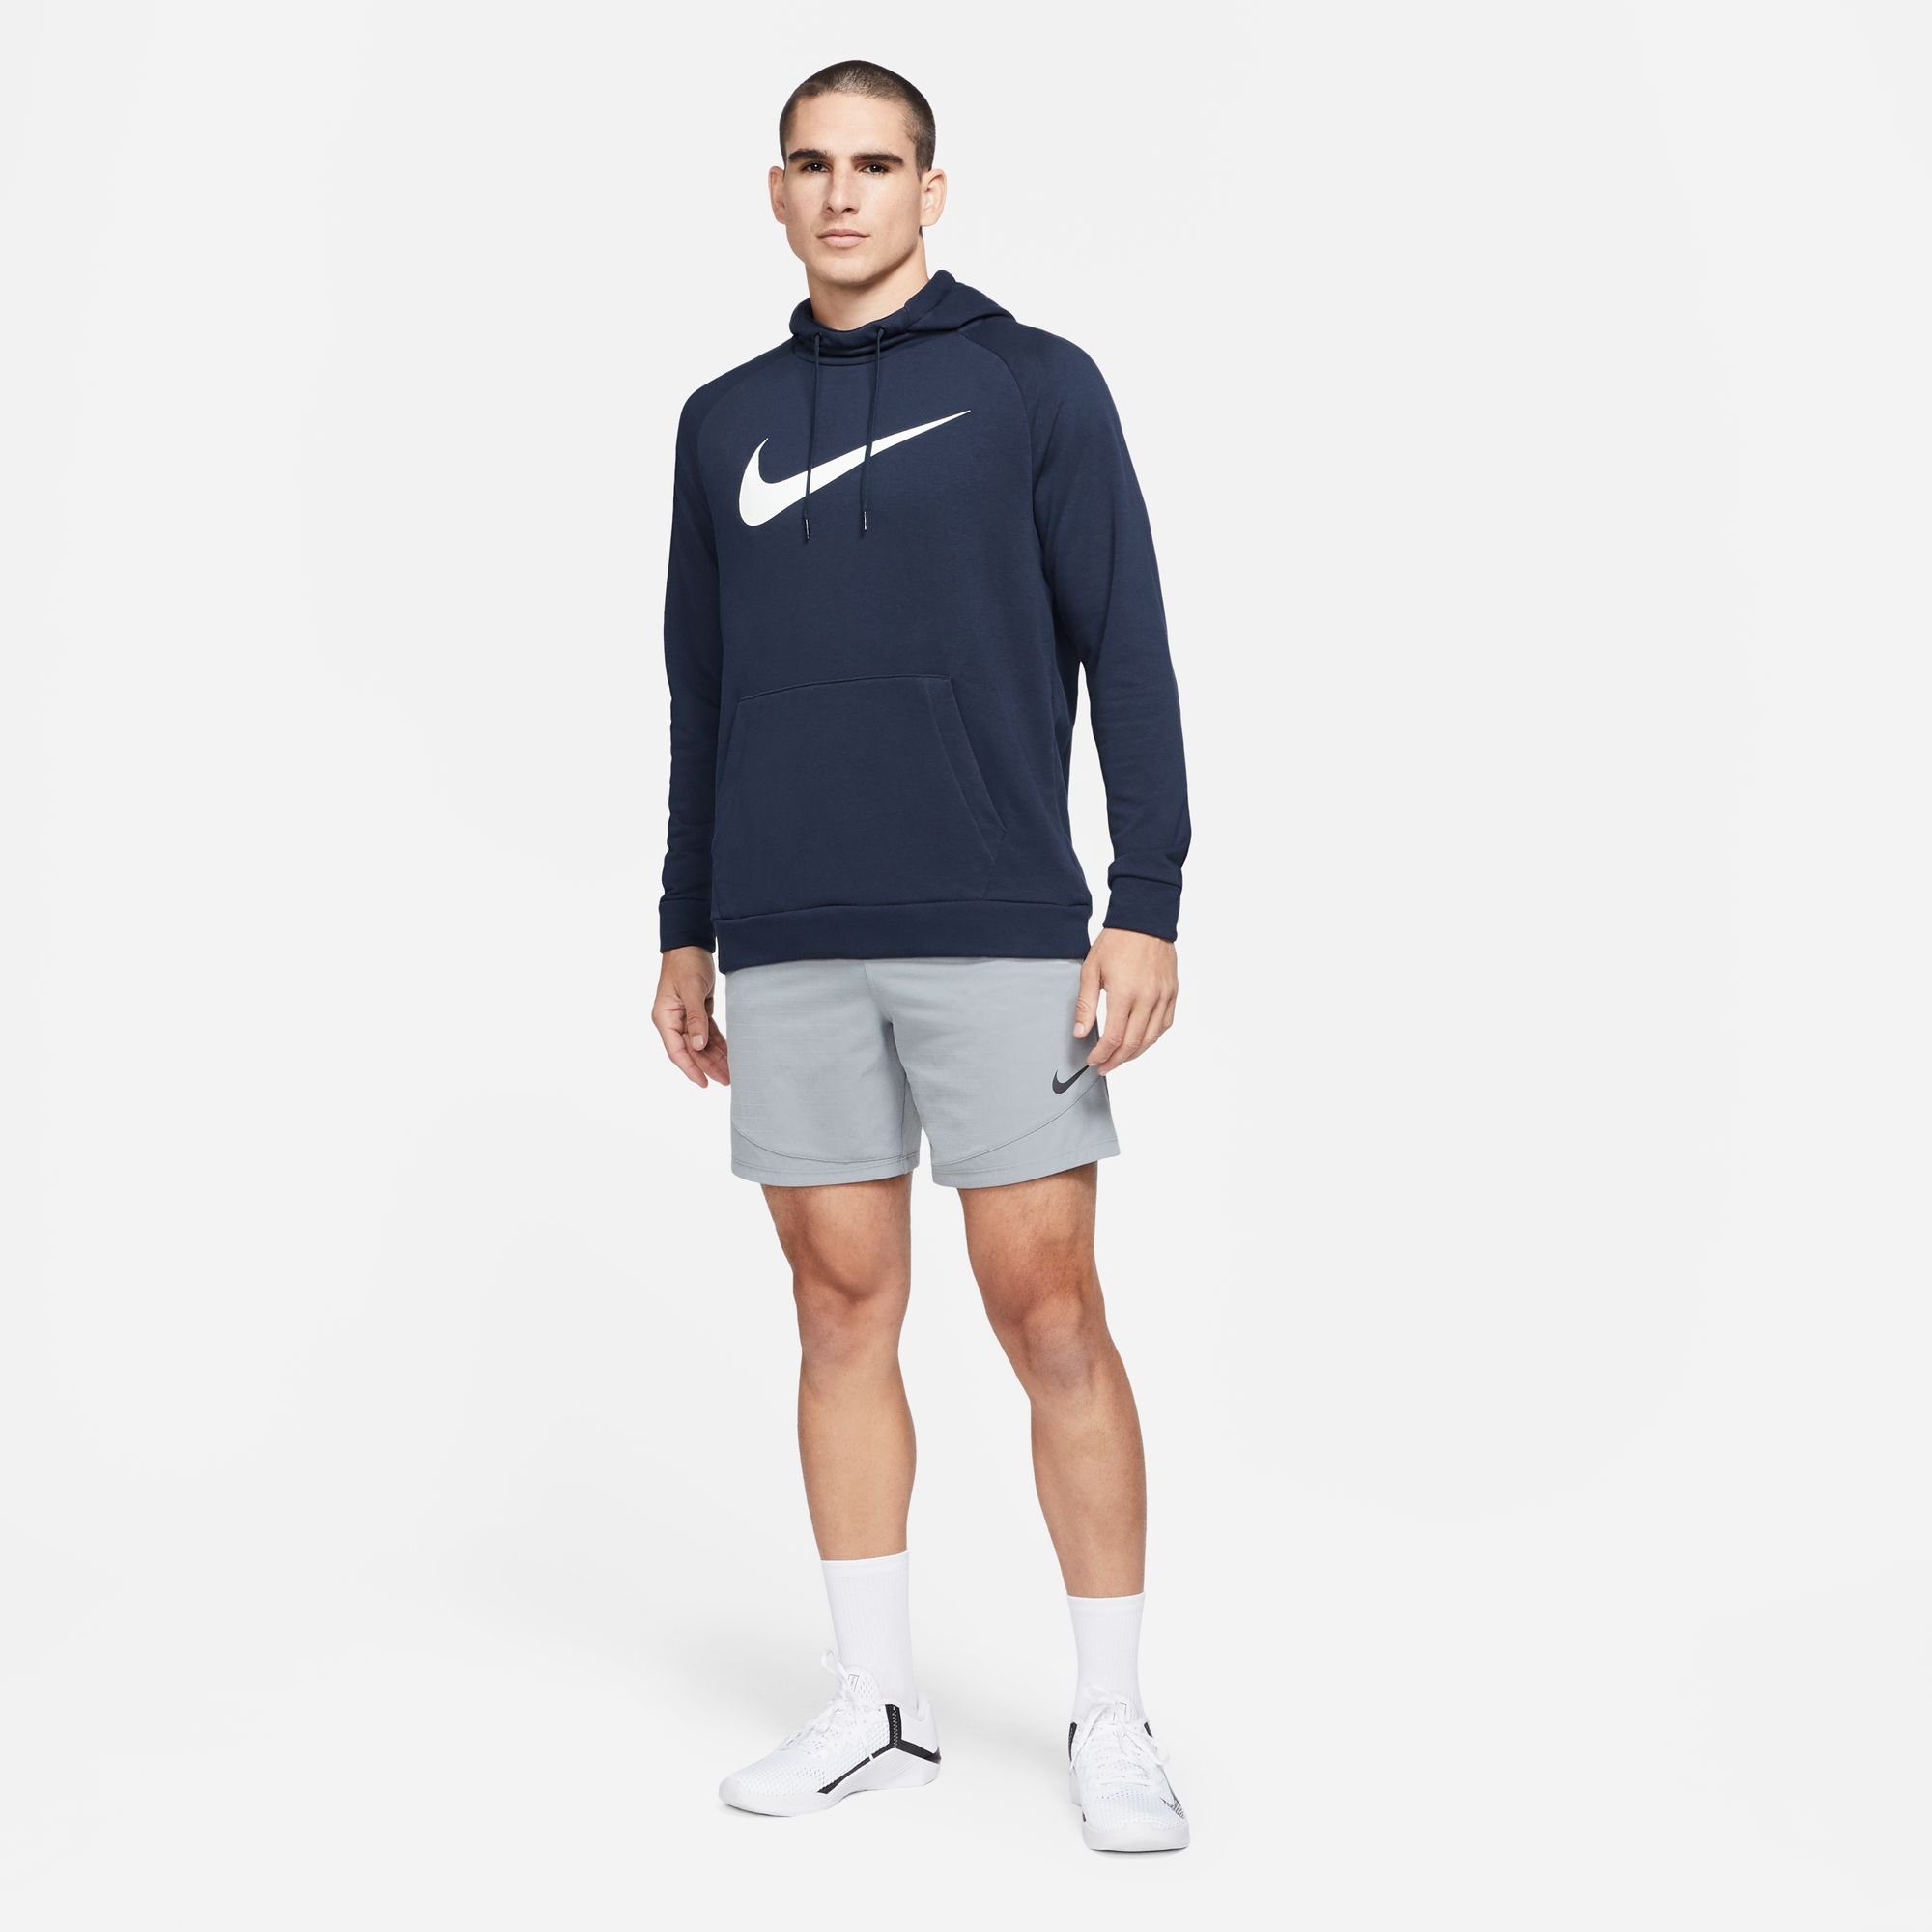 HOODIE TRAINING MEN'S PULLOVER marine Nike DRI-FIT Kapuzensweatshirt